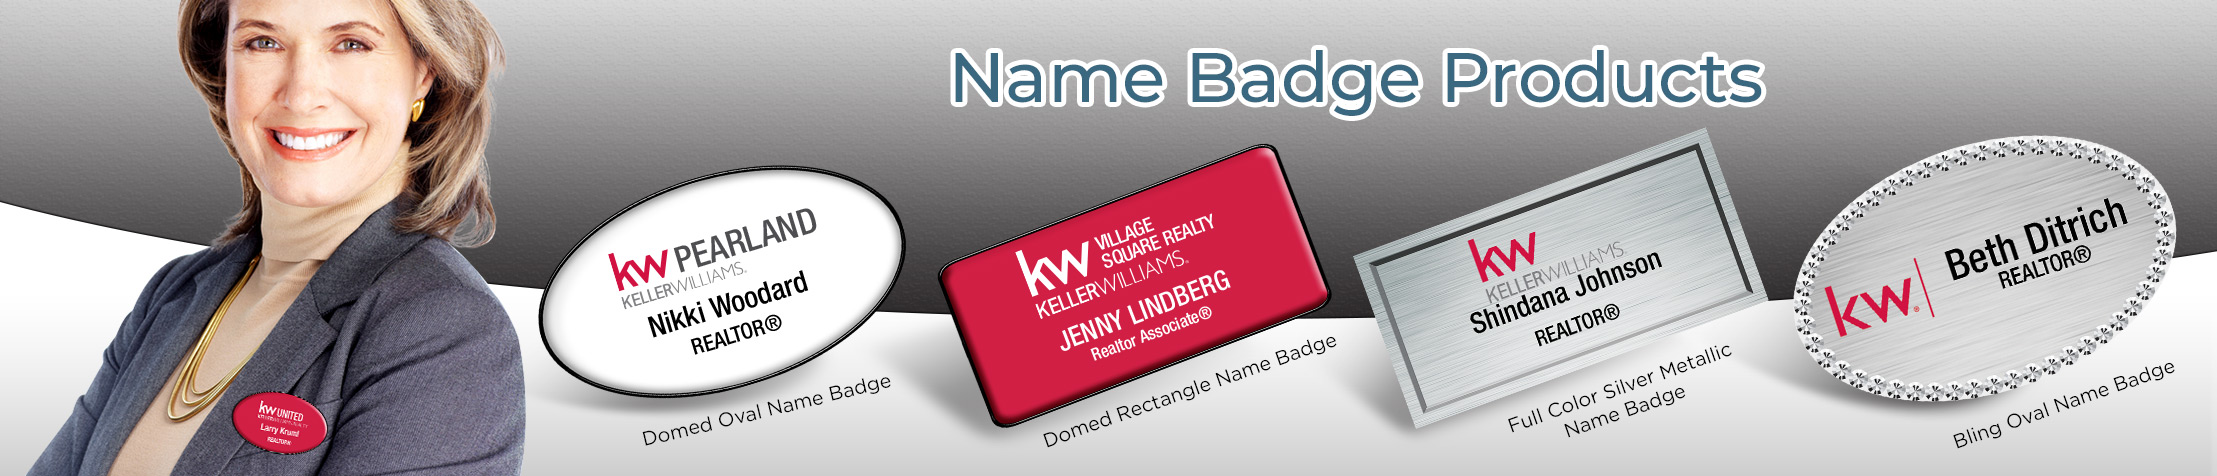 Keller Williams Real Estate Name Badge Products - KW Approved Vendor Name Tags for Realtors | BestPrintBuy.com